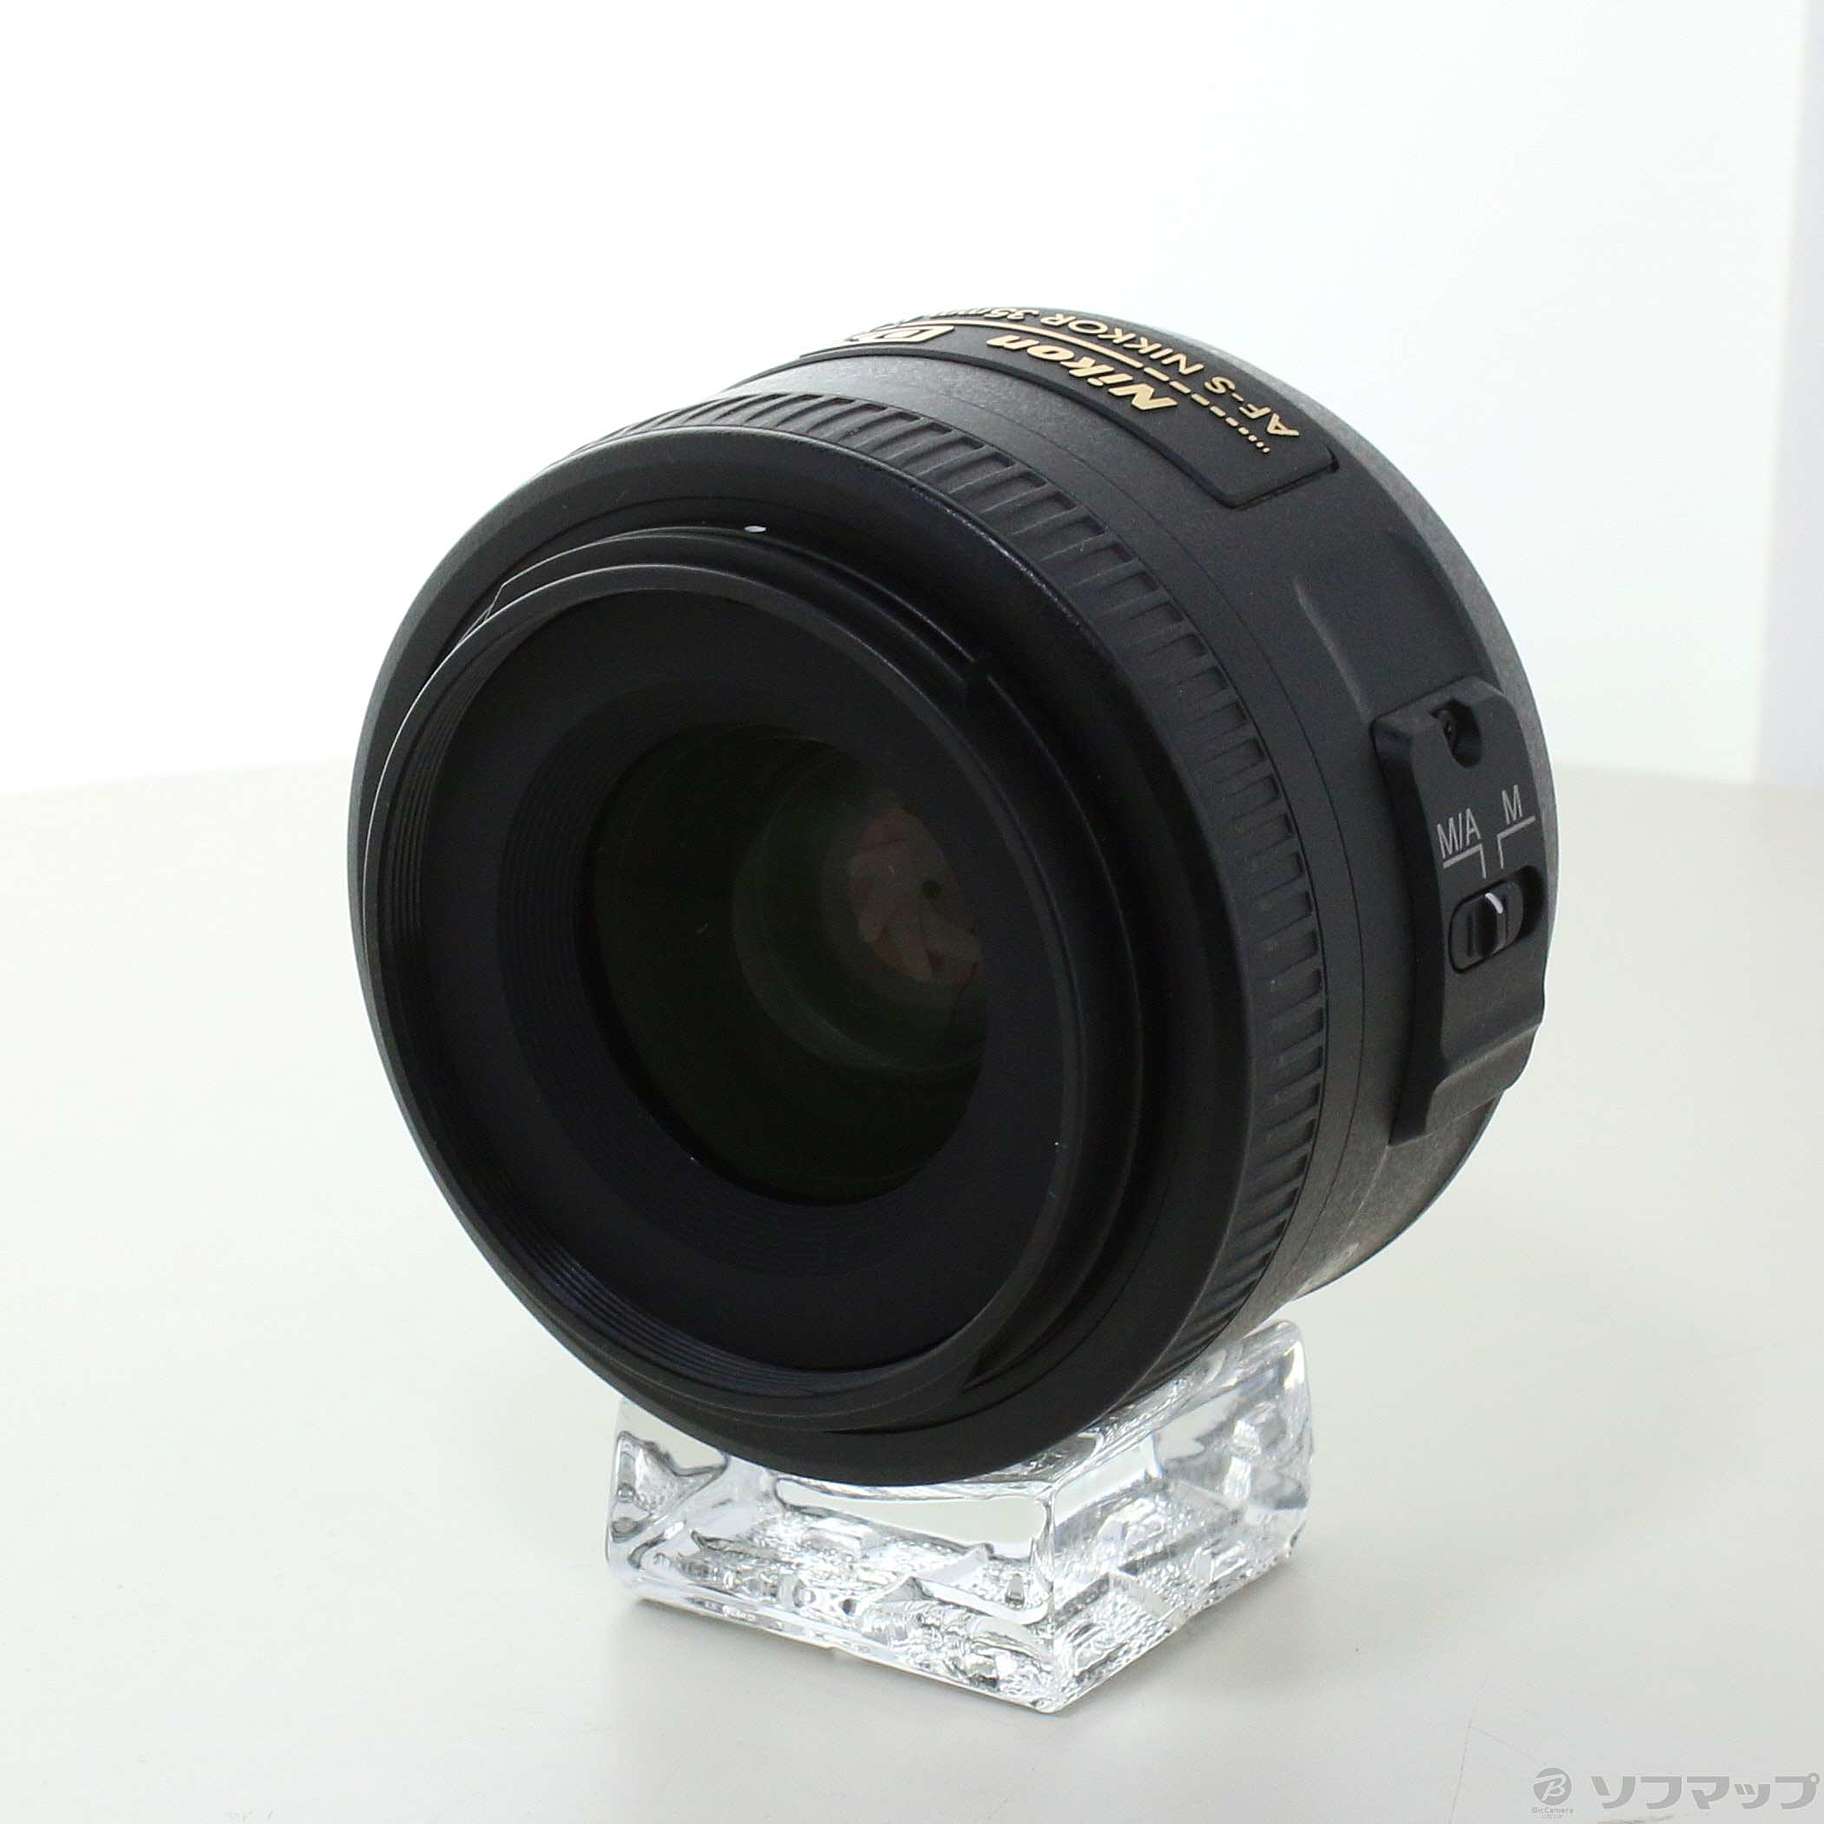 Nikon DX35mm f1.8